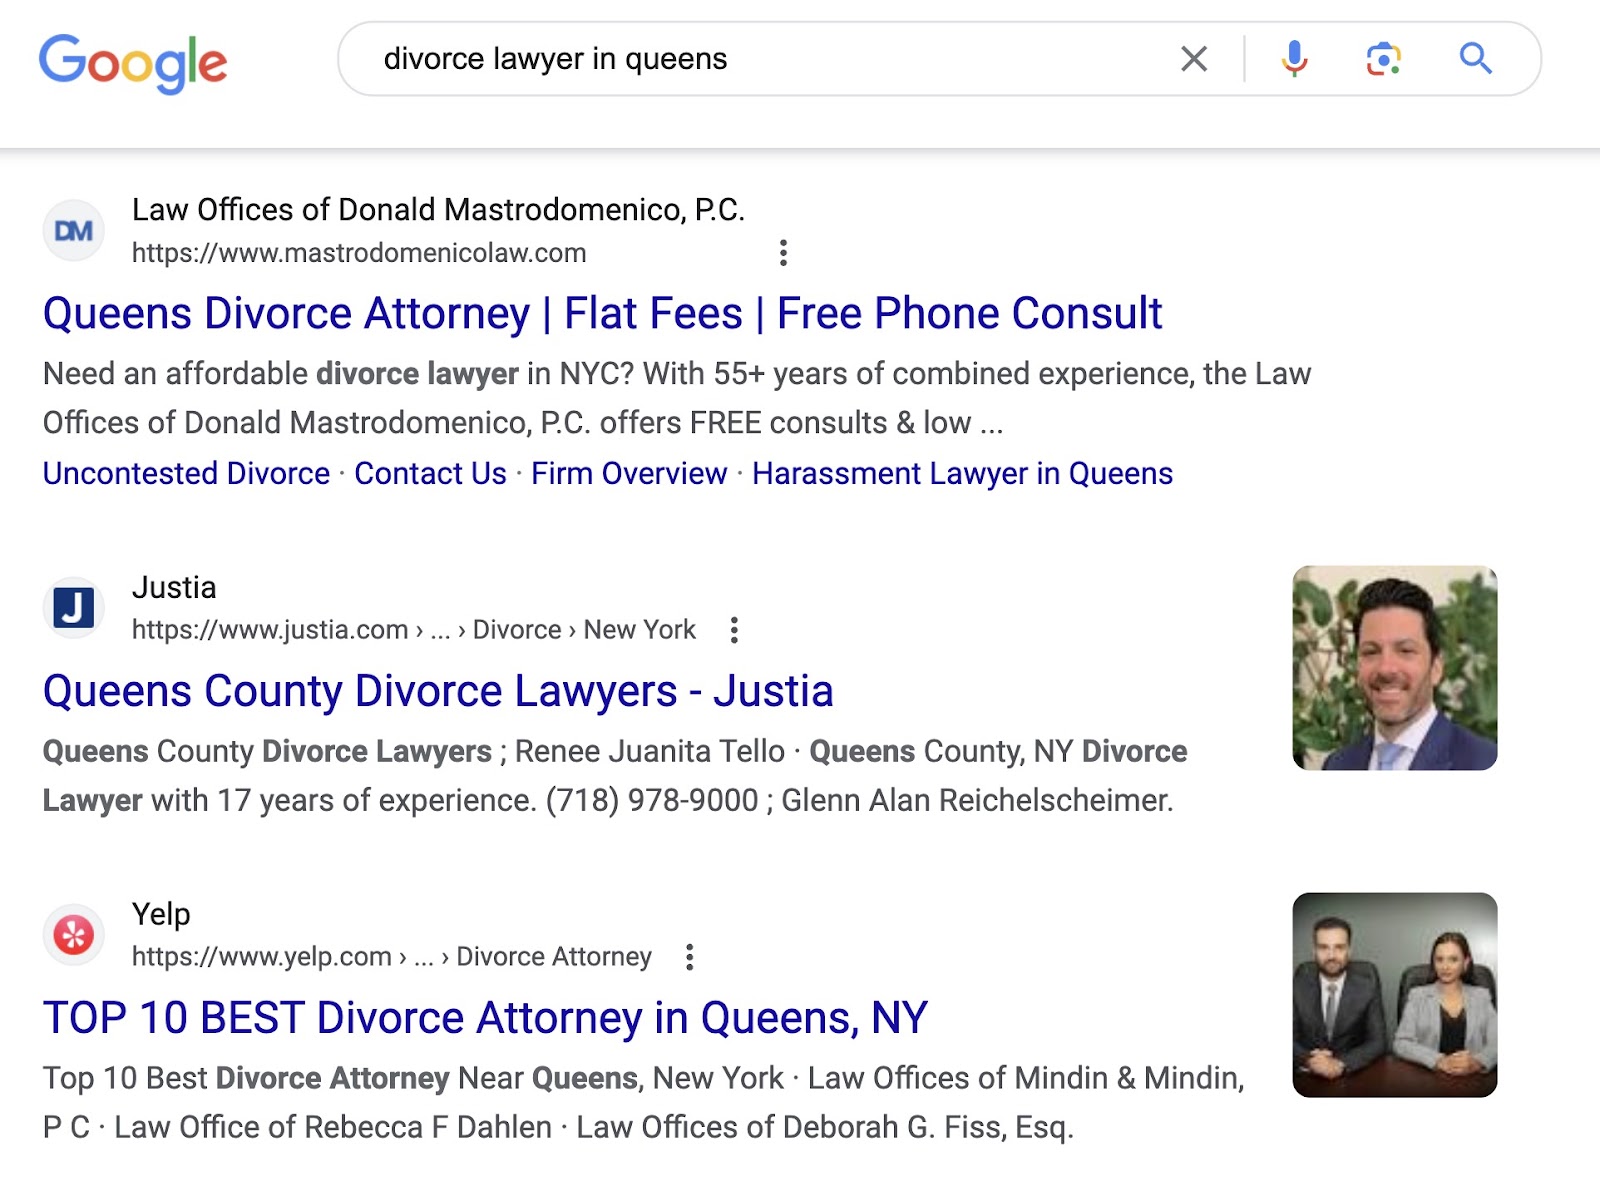 Google's SERP for “divorce lawyer in queens” query